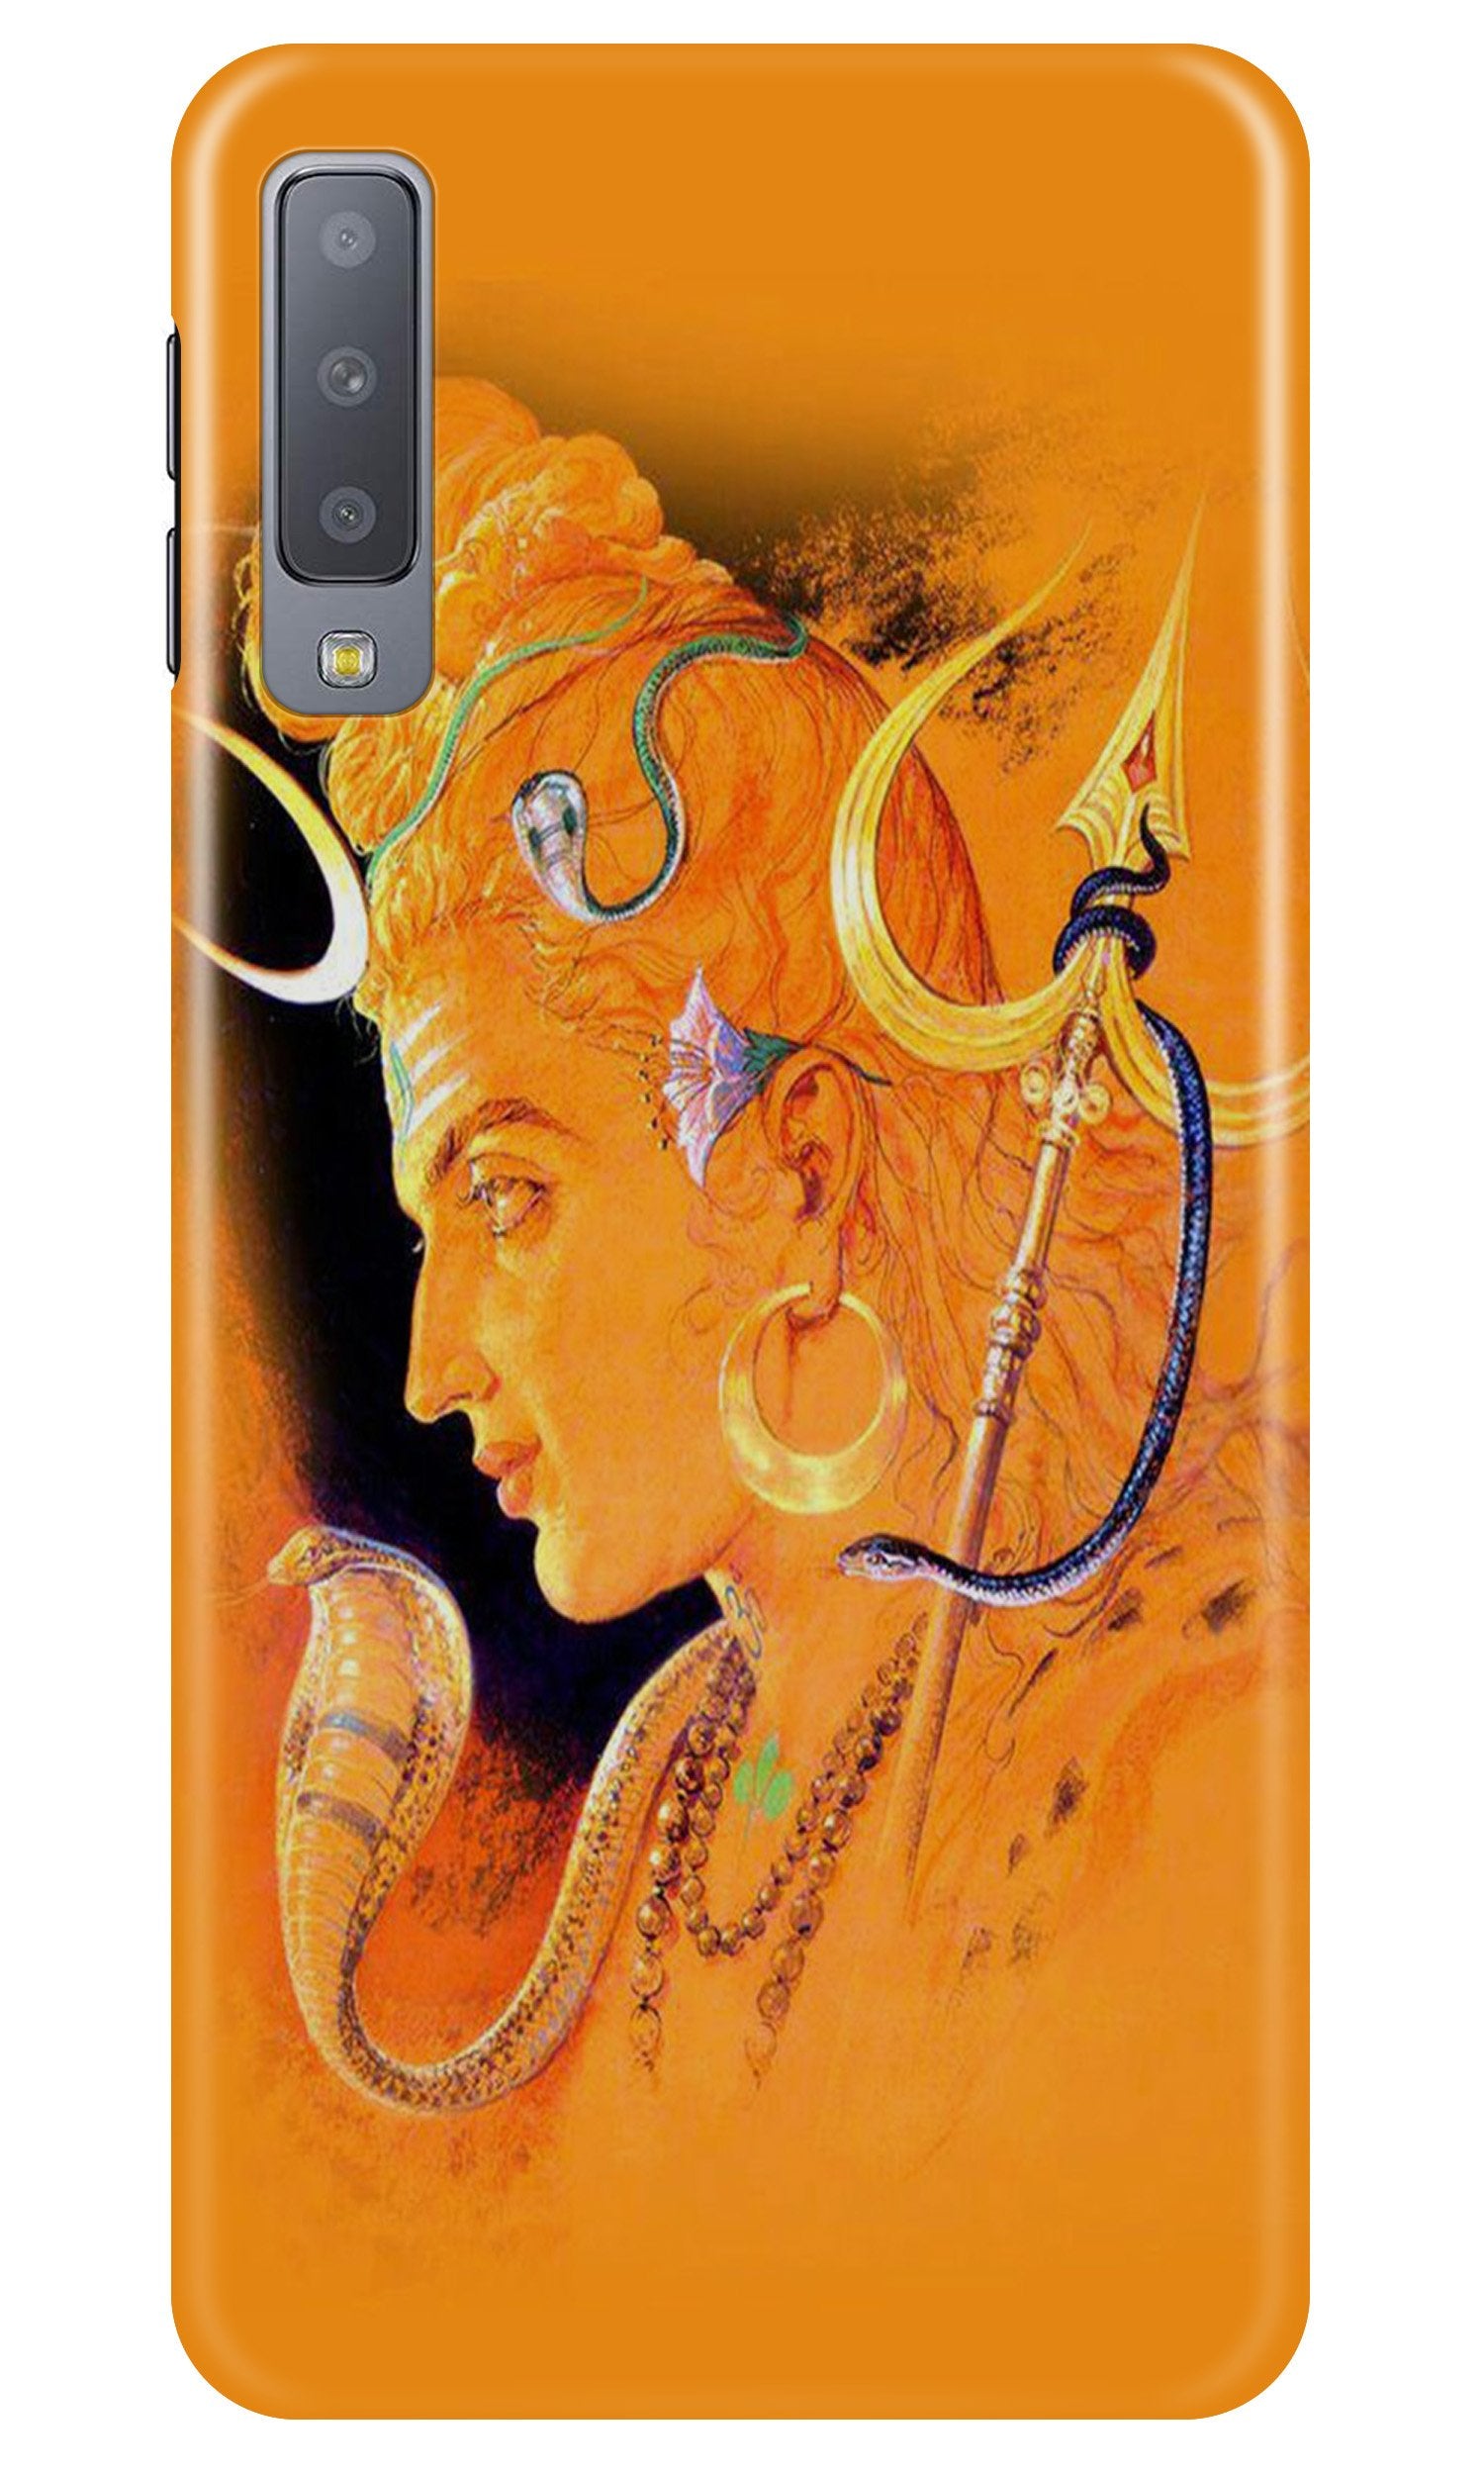 Lord Shiva Case for Samung Galaxy A70s (Design No. 293)